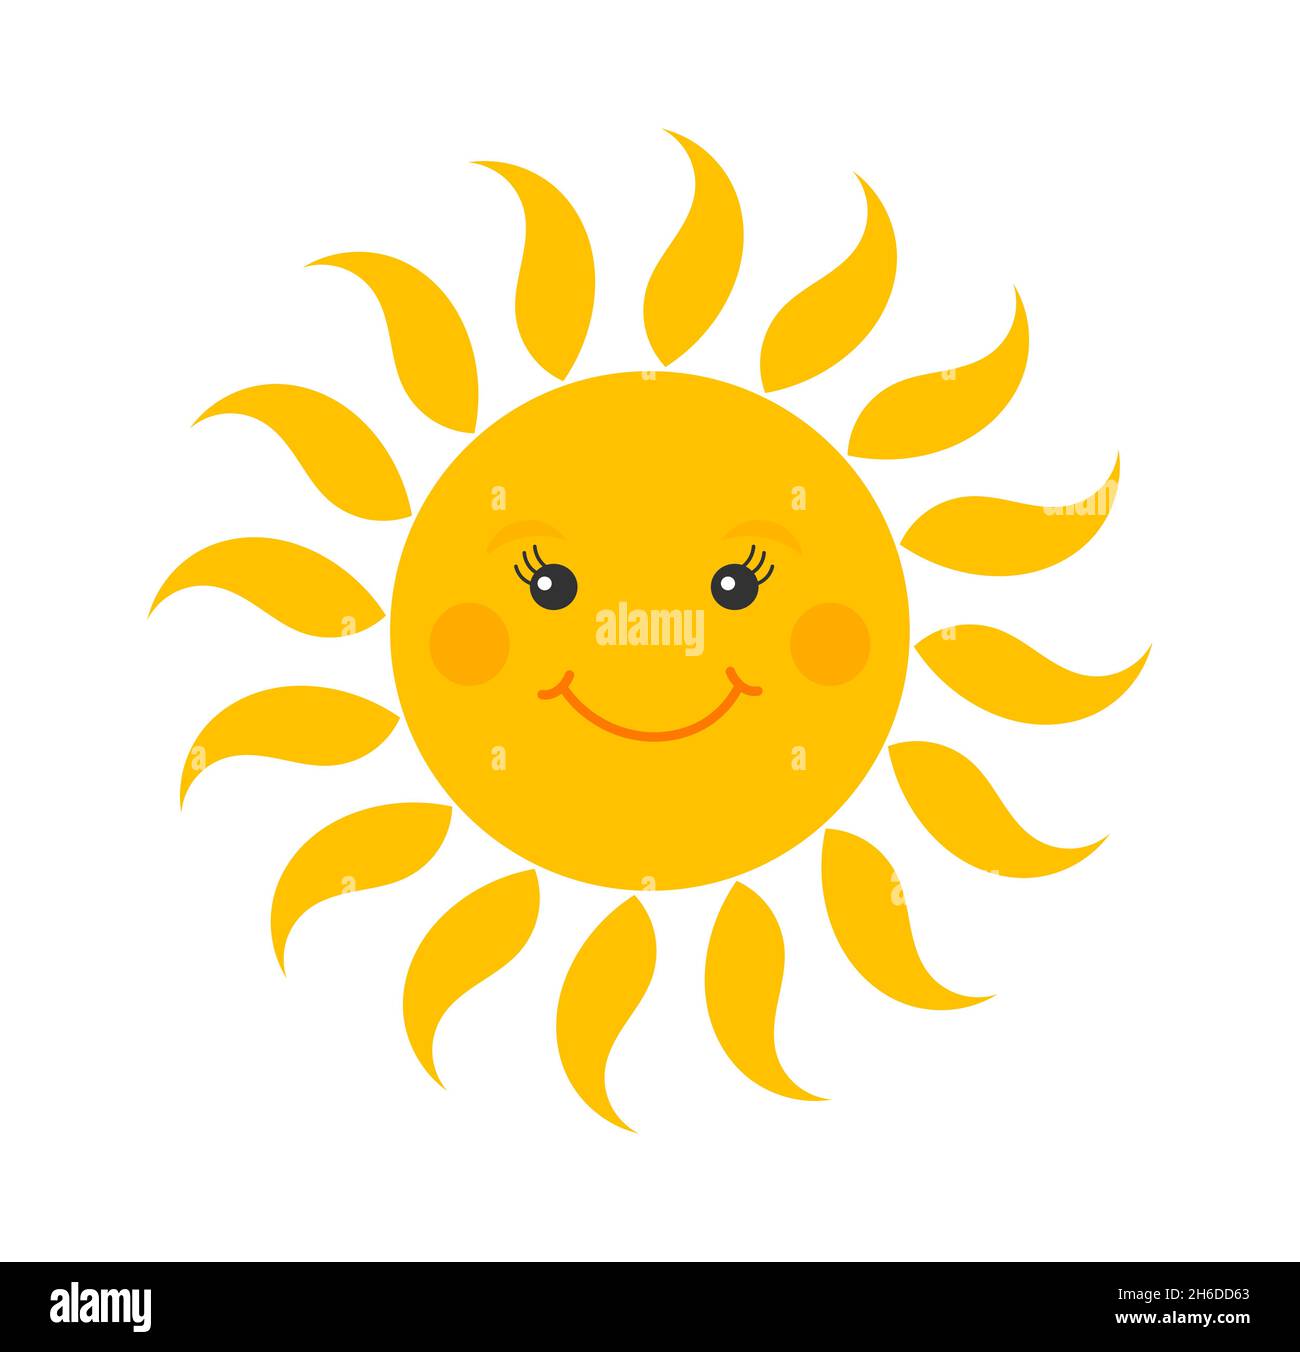 Cute smiling sun cartoon icon. Vector illustration Stock Vector Image ...